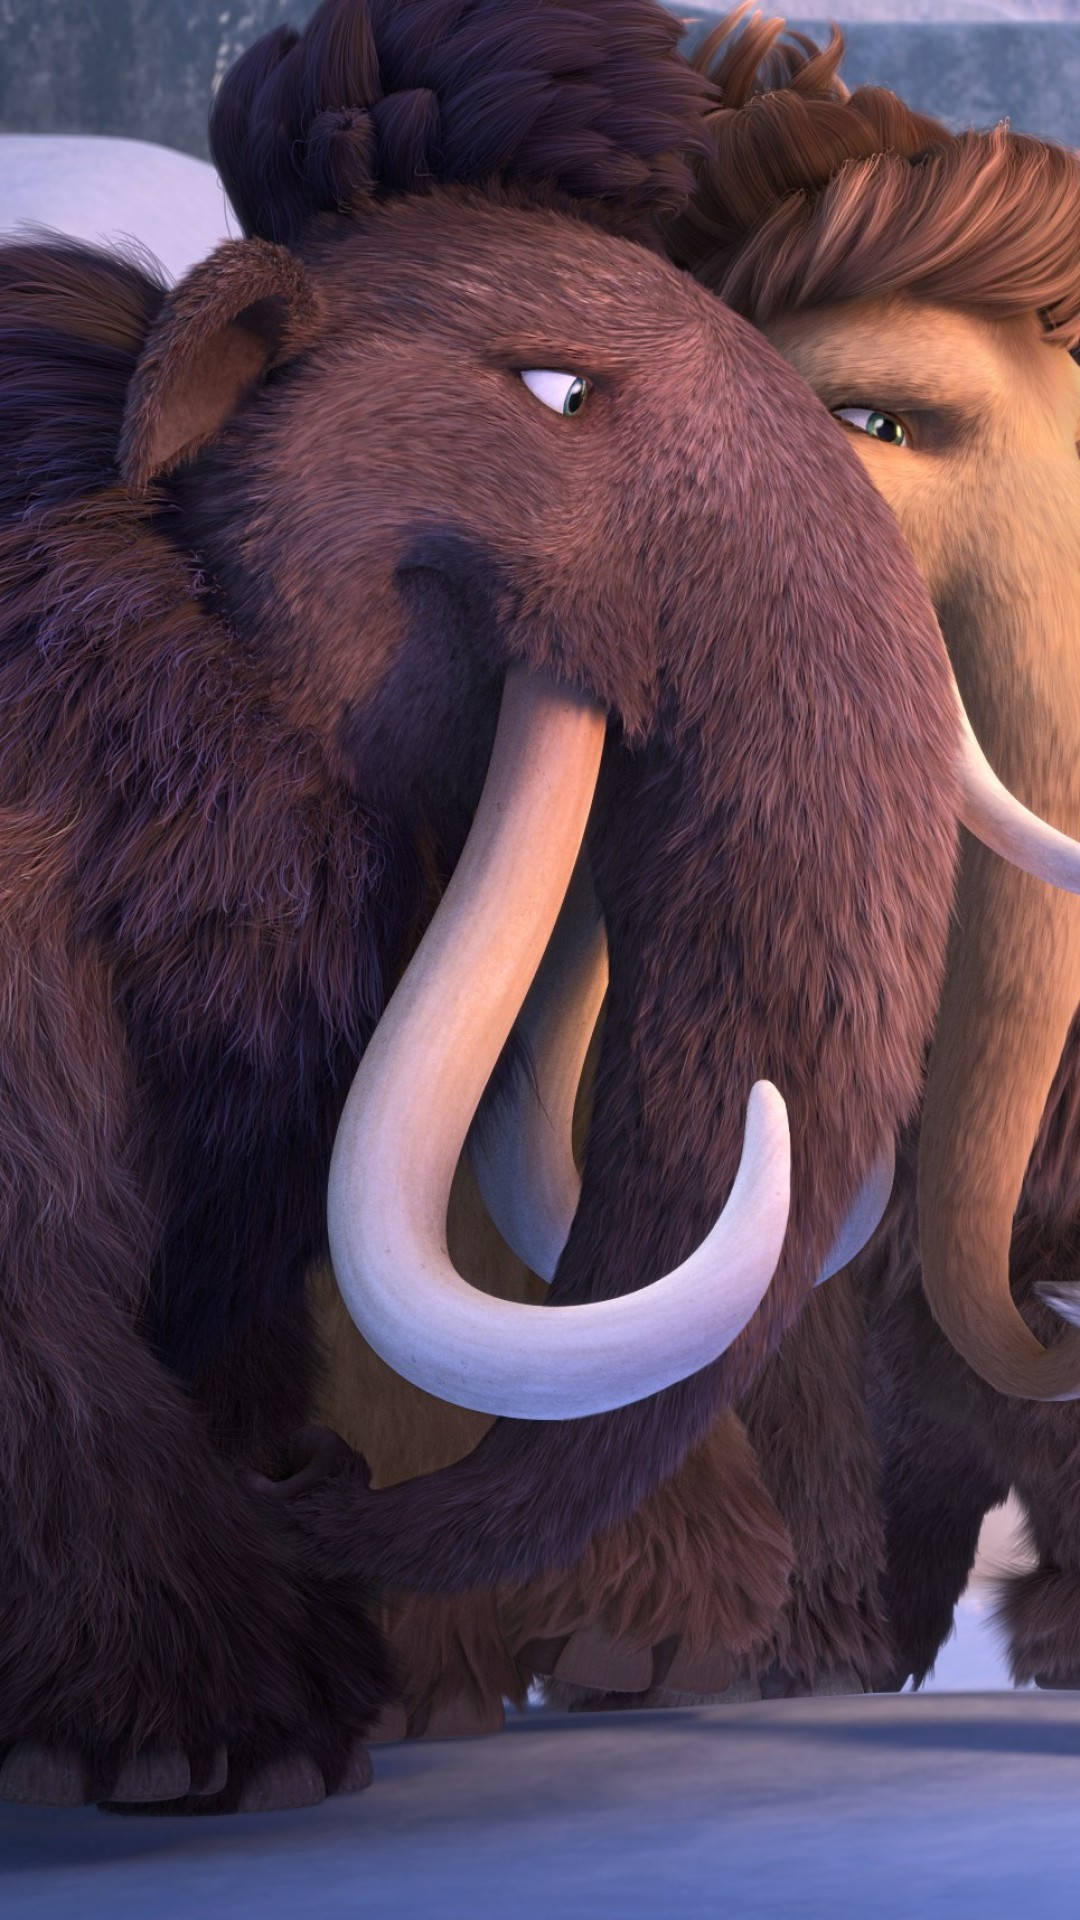 Mammoth Posing Side By Side Wallpaper